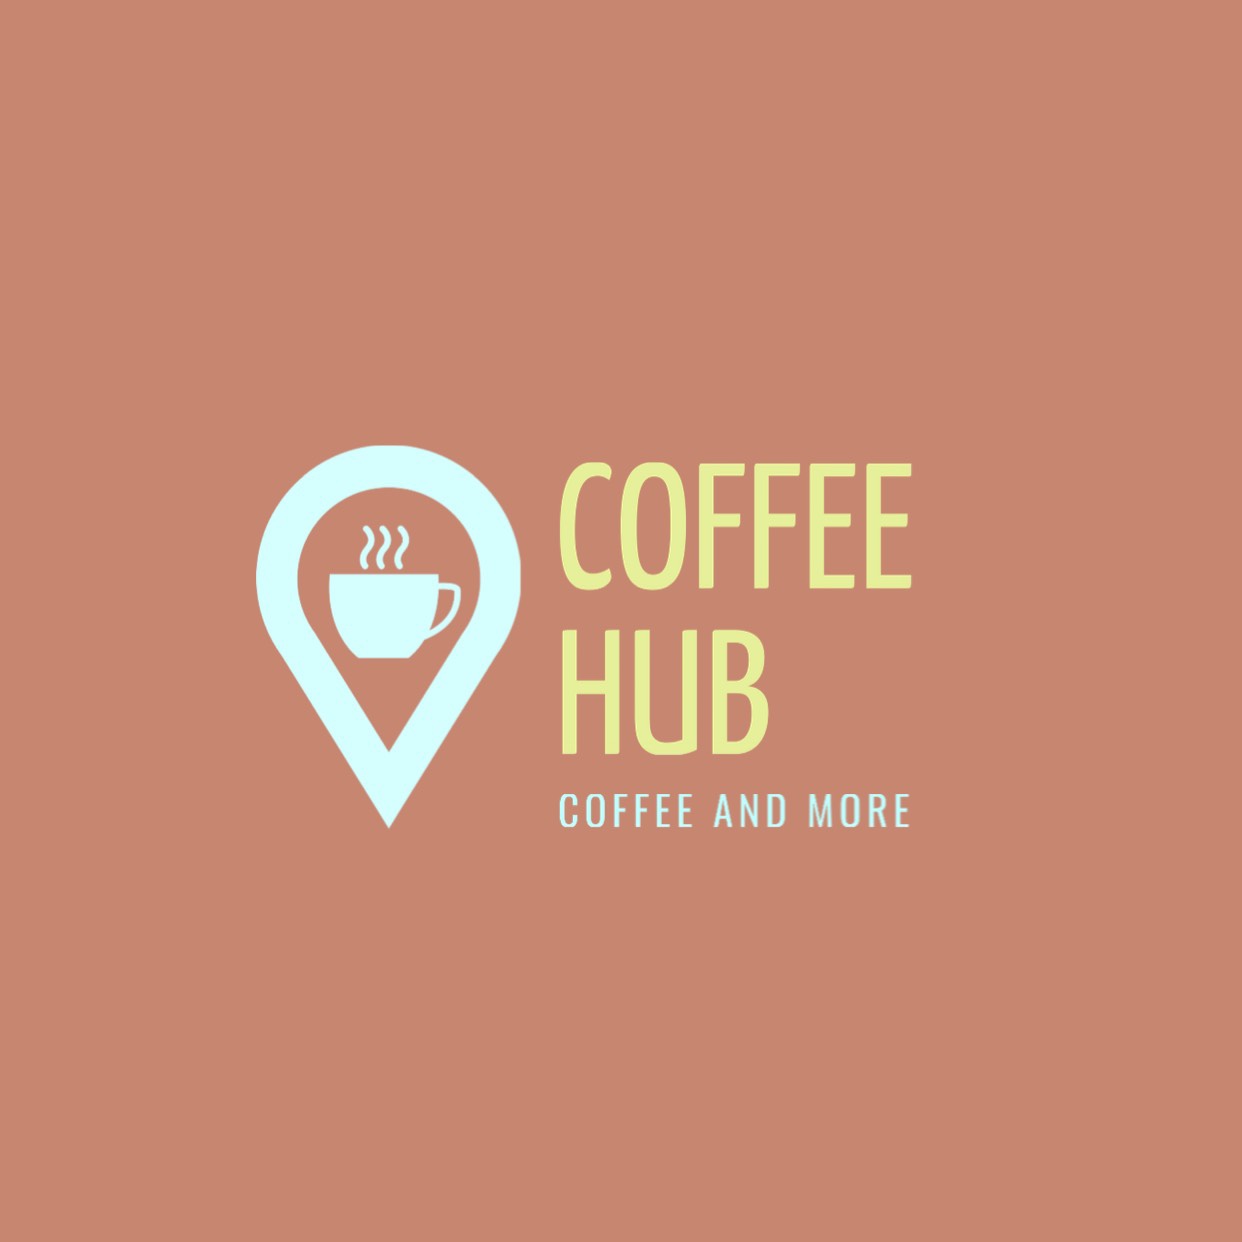 Coffee Cup Illustration Cafe Logo Design Template